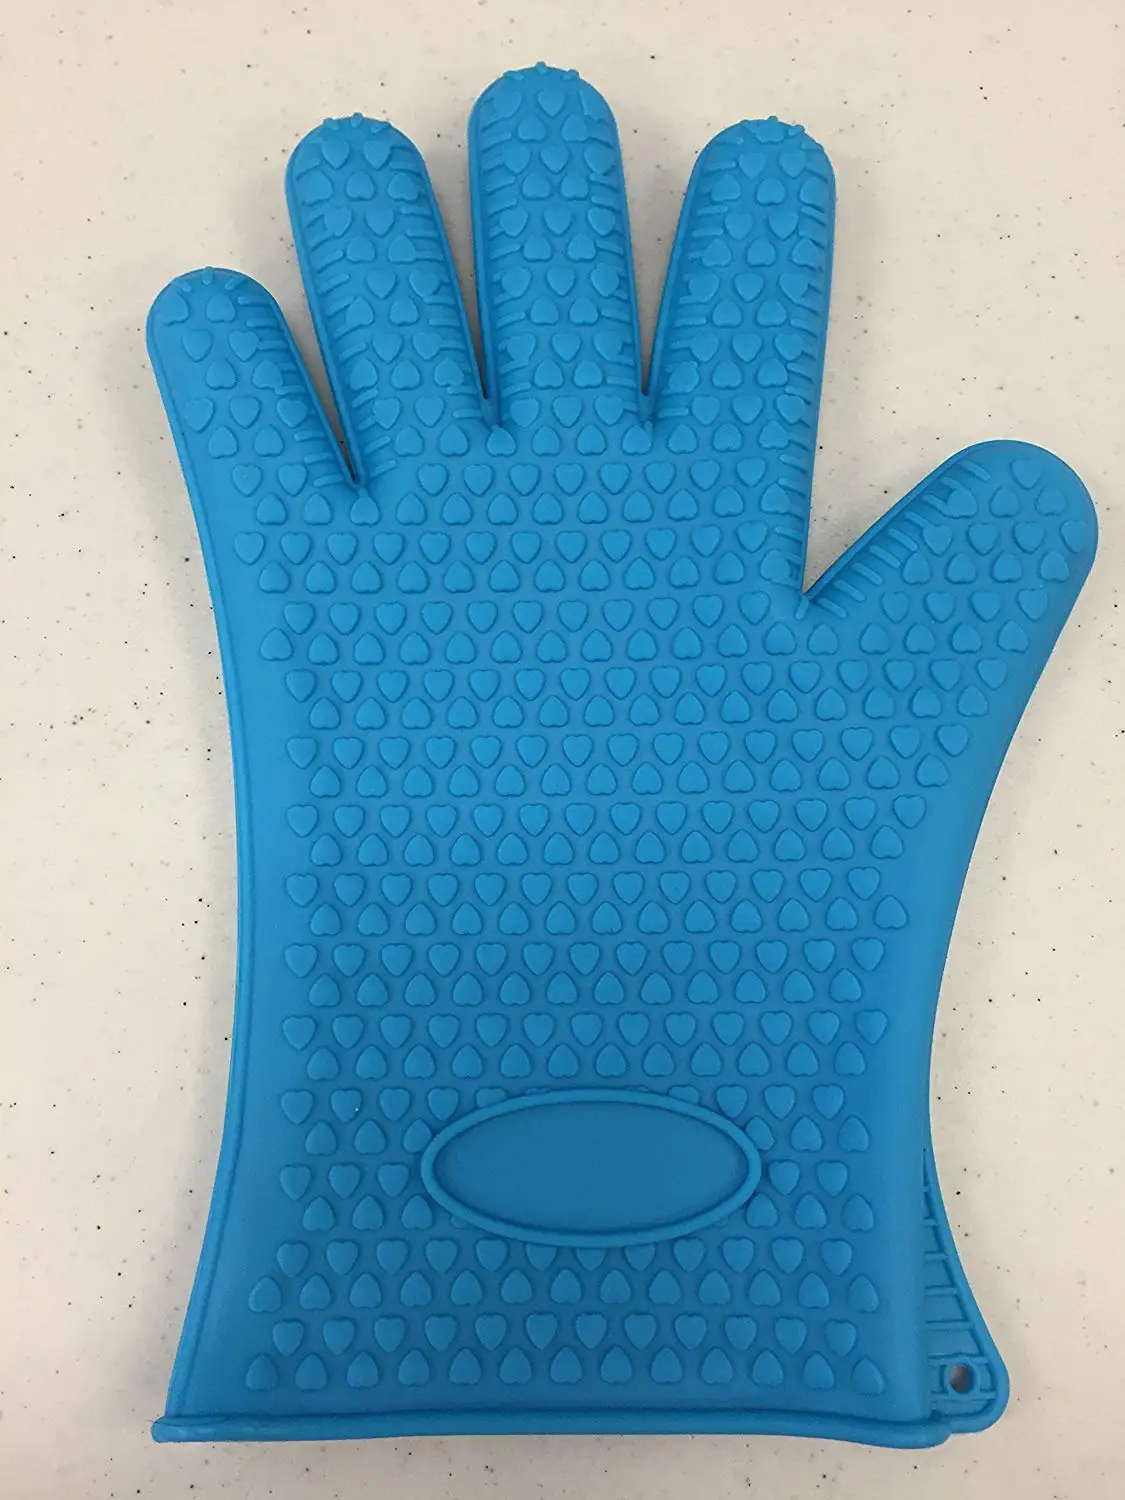 Cheap Blue Oven Gloves, find Blue Oven Gloves deals on line at Alibaba.com